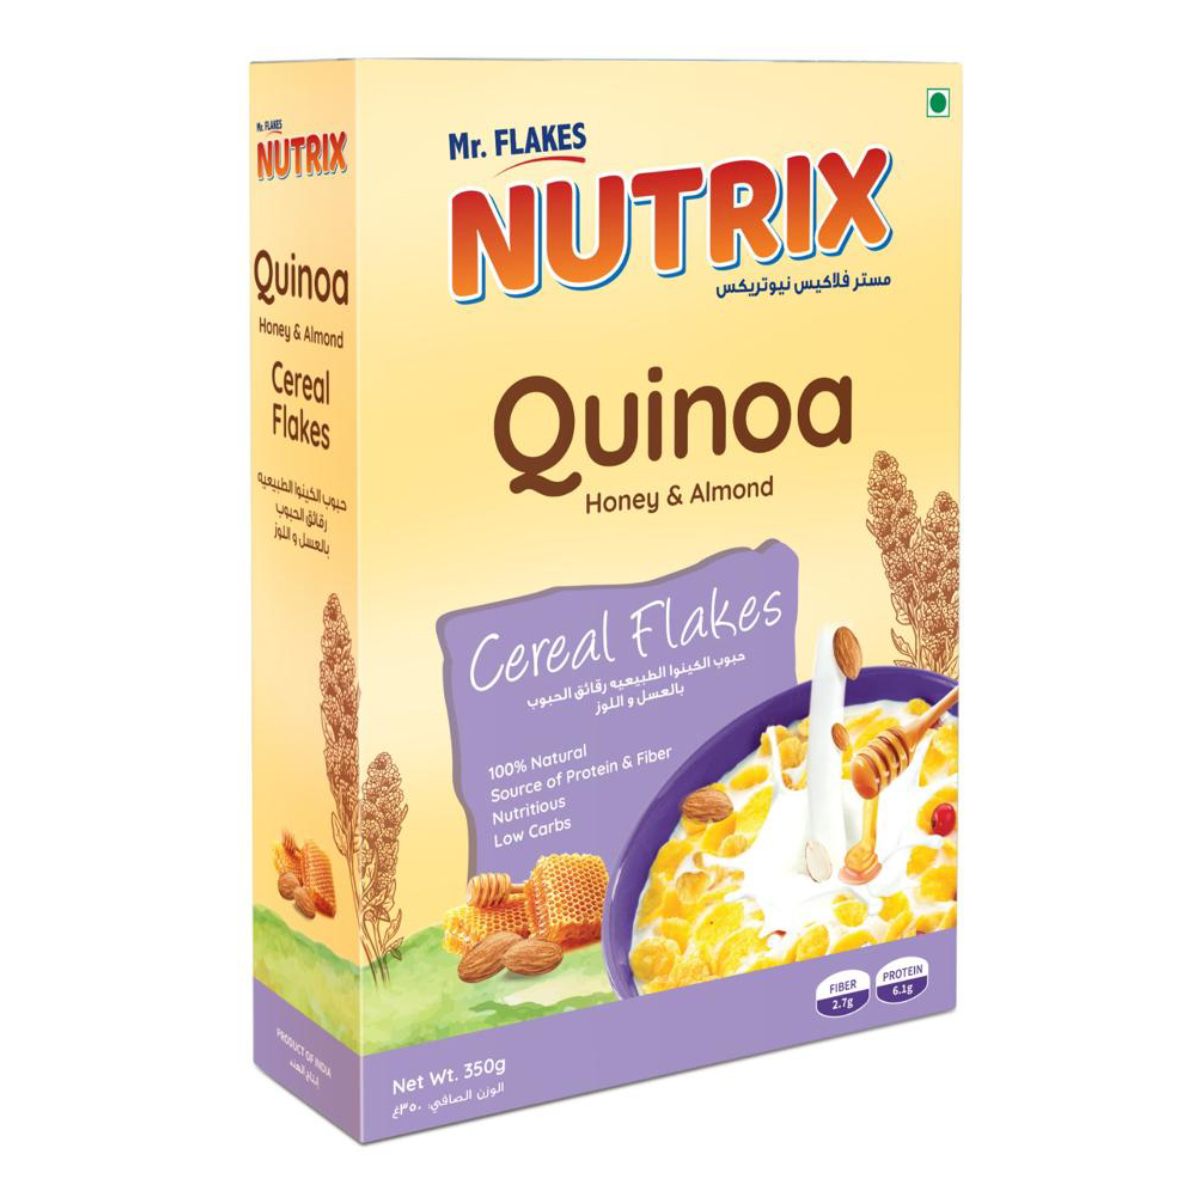 Mr. Flakes Nutrix Quinoa Honey & Almond Cereal Flakes 350 g